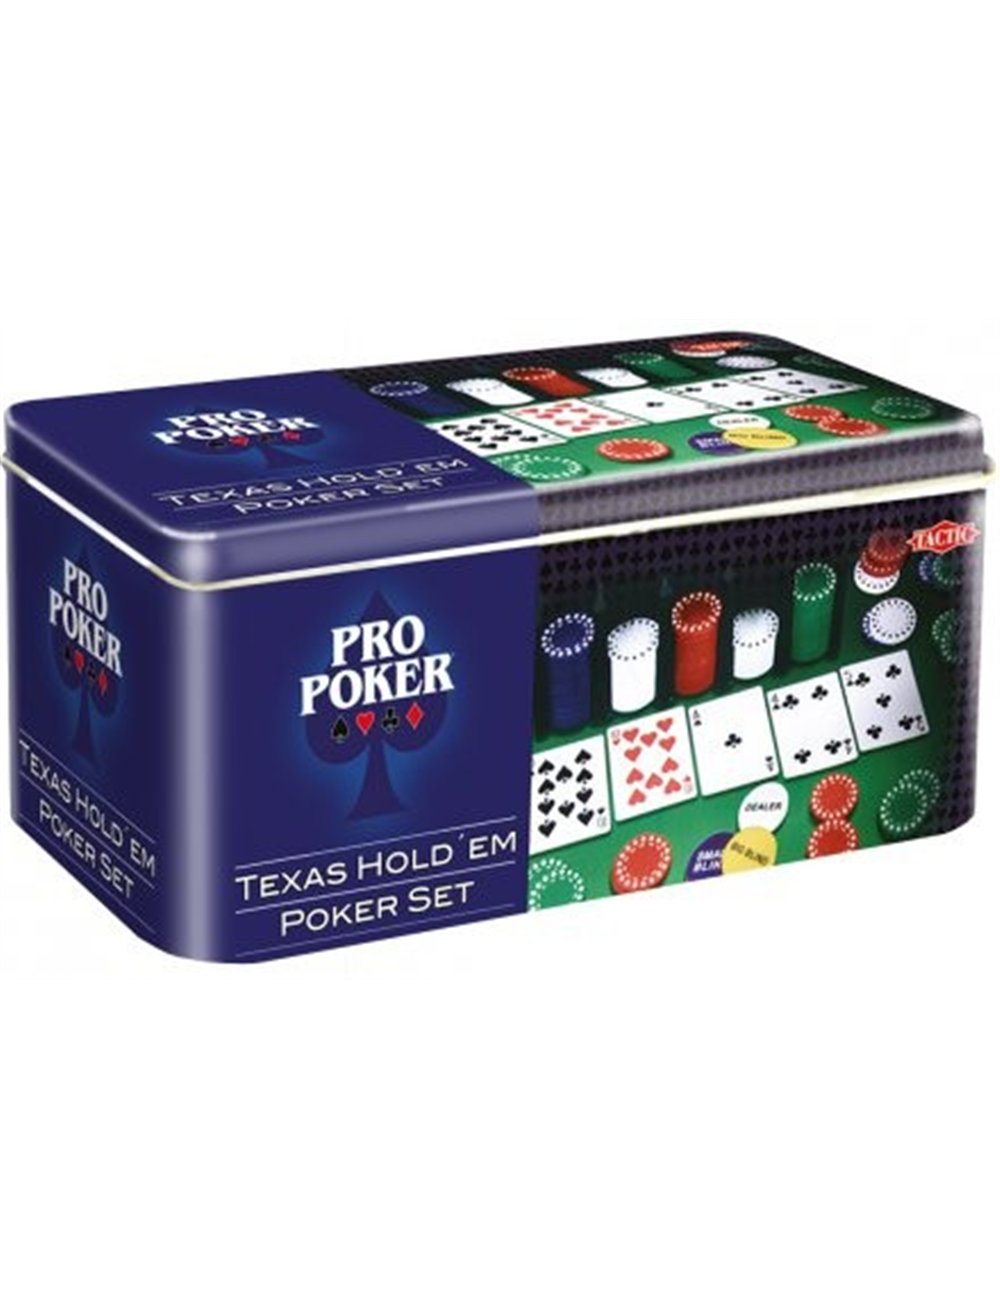 Pro Poker Texas Hold'em